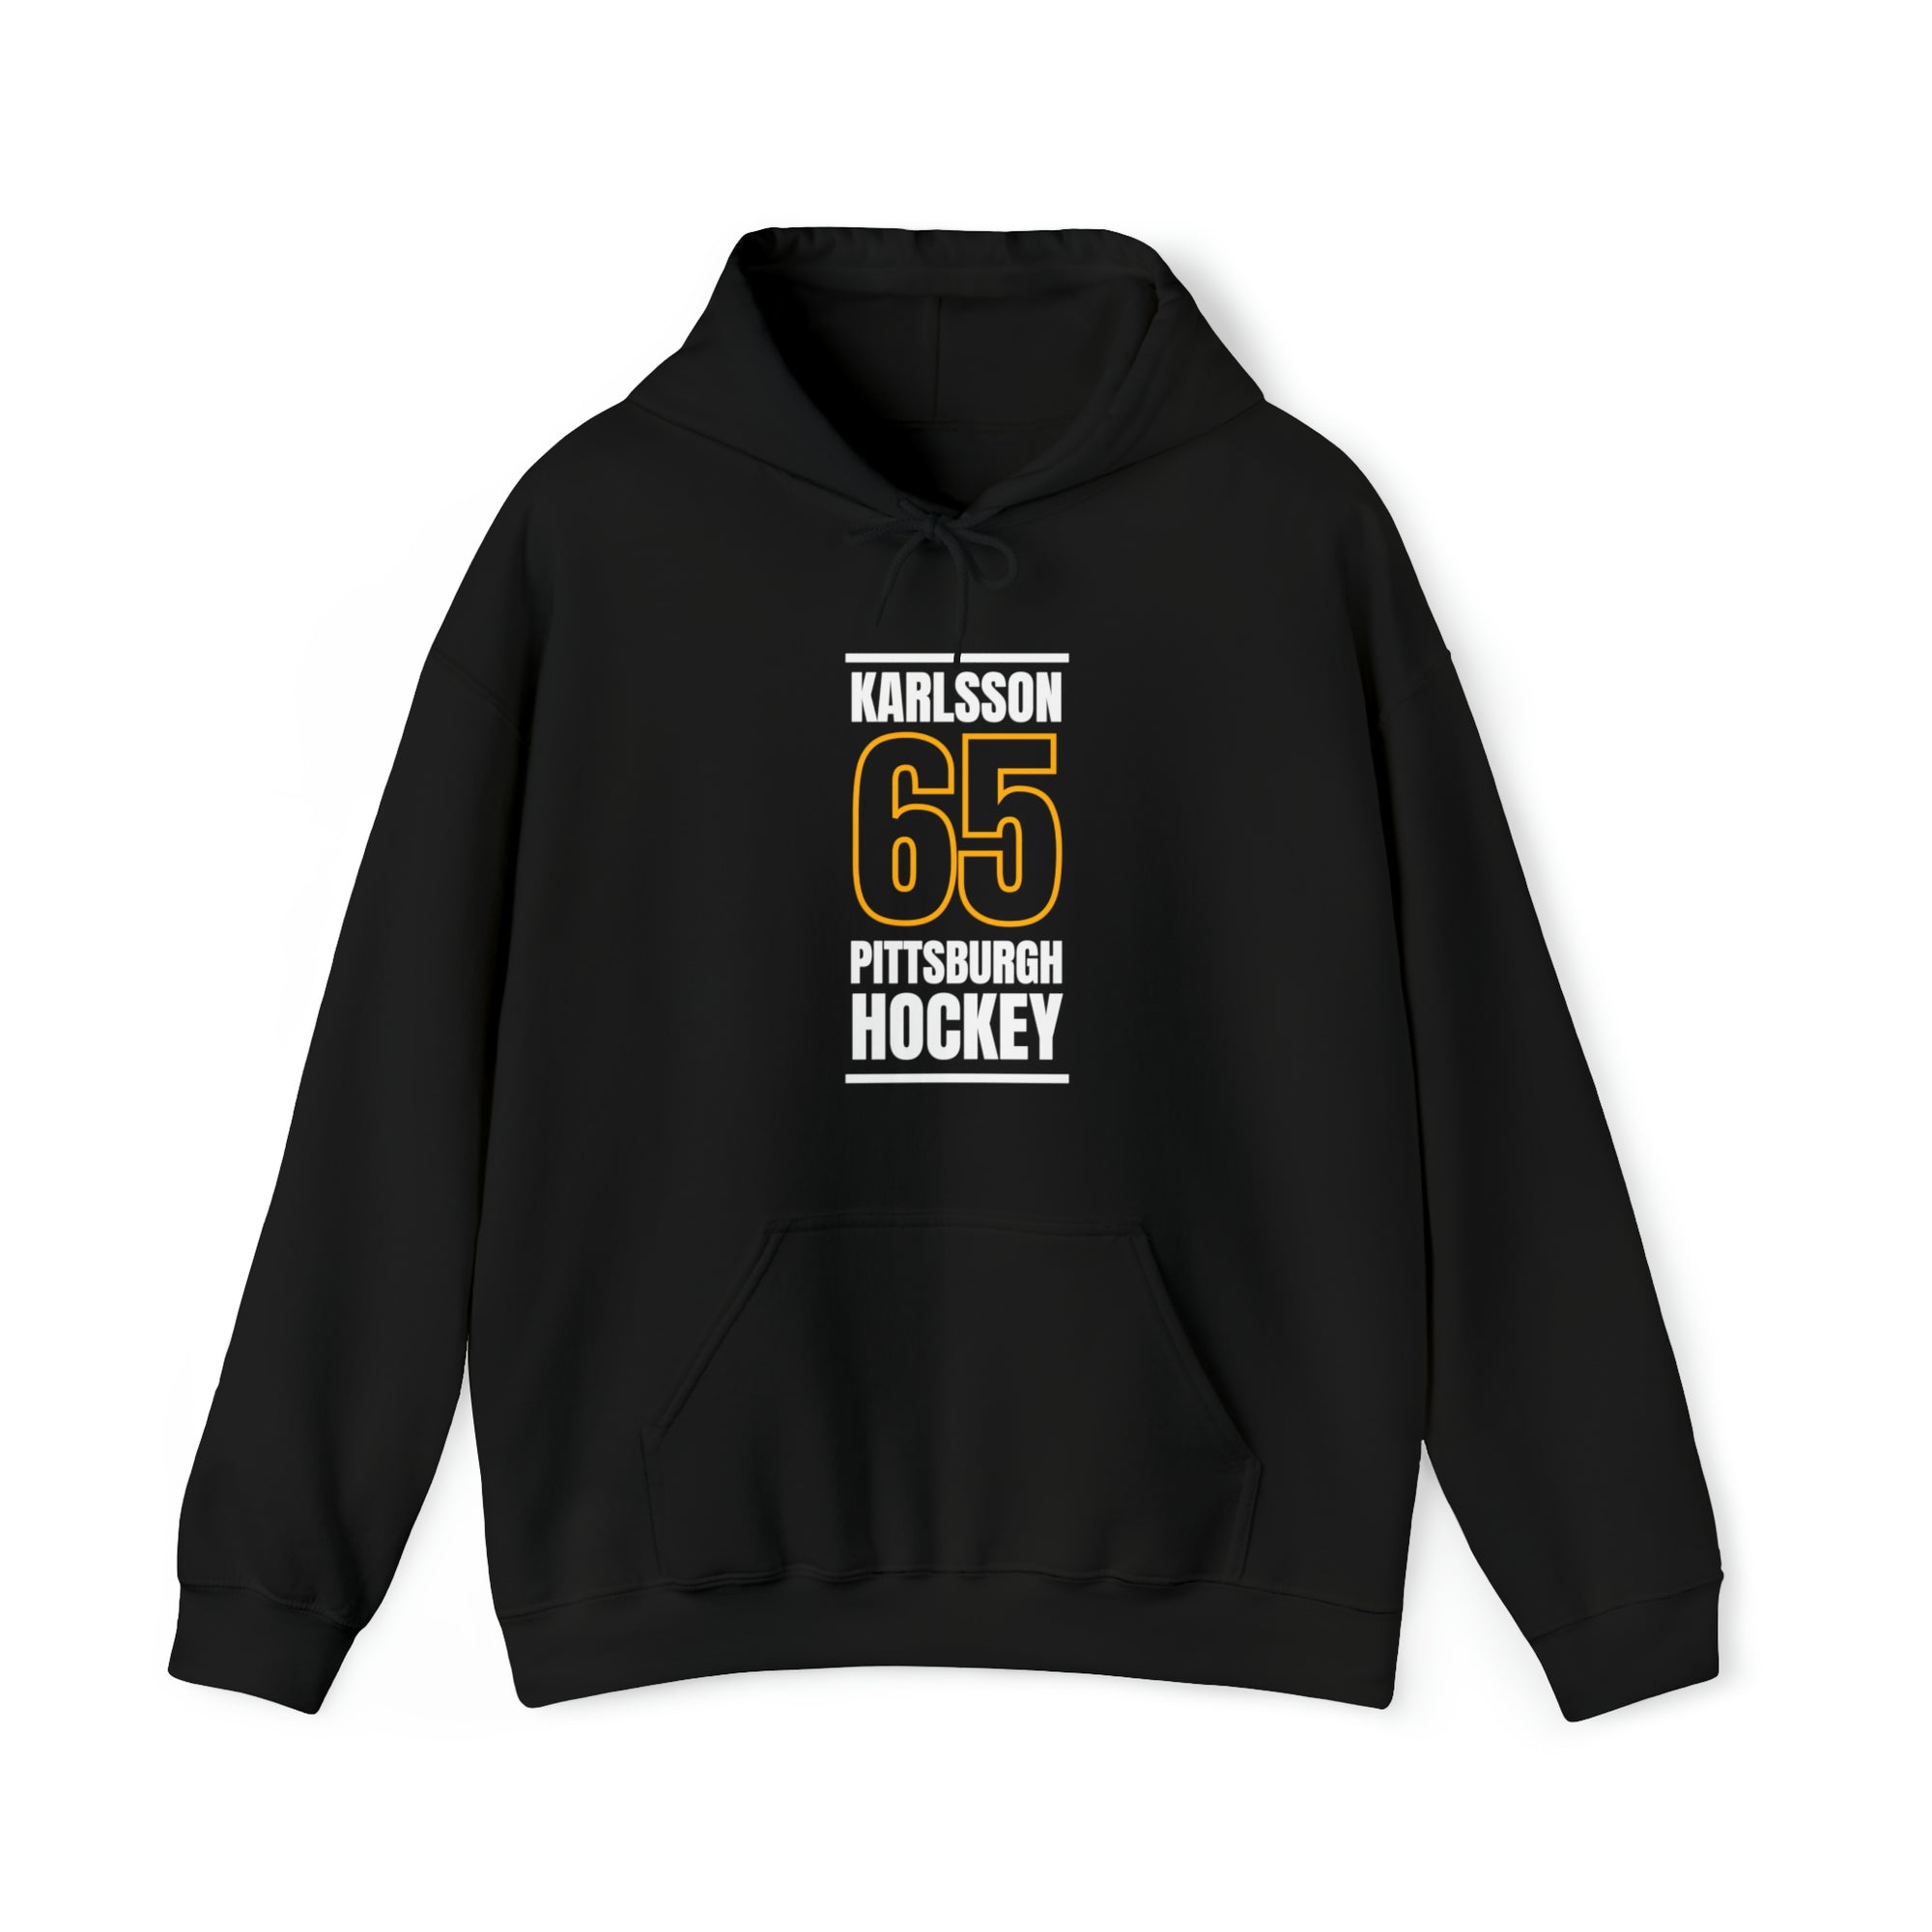 Karlsson 65 Pittsburgh Hockey Black Vertical Design Unisex Hooded Sweatshirt